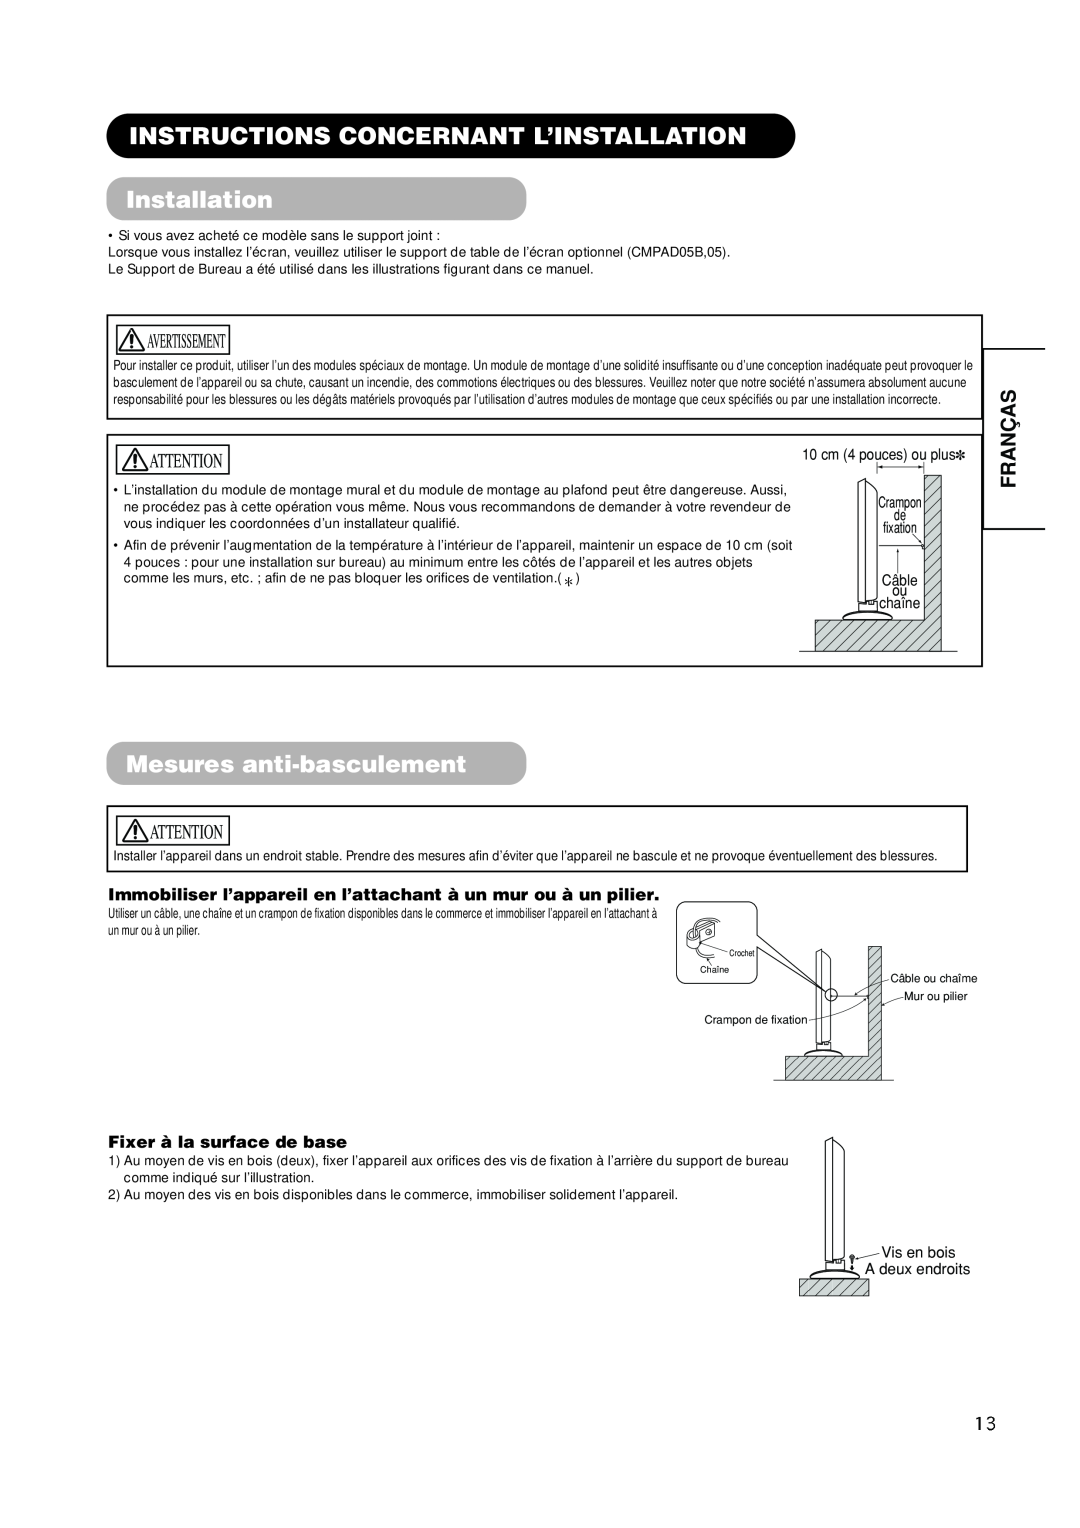 Hitachi PW1A user manual INSTRUCTIONS CONCERNANT L’INSTALLATION Installation, Mesures anti-basculement, Franças 